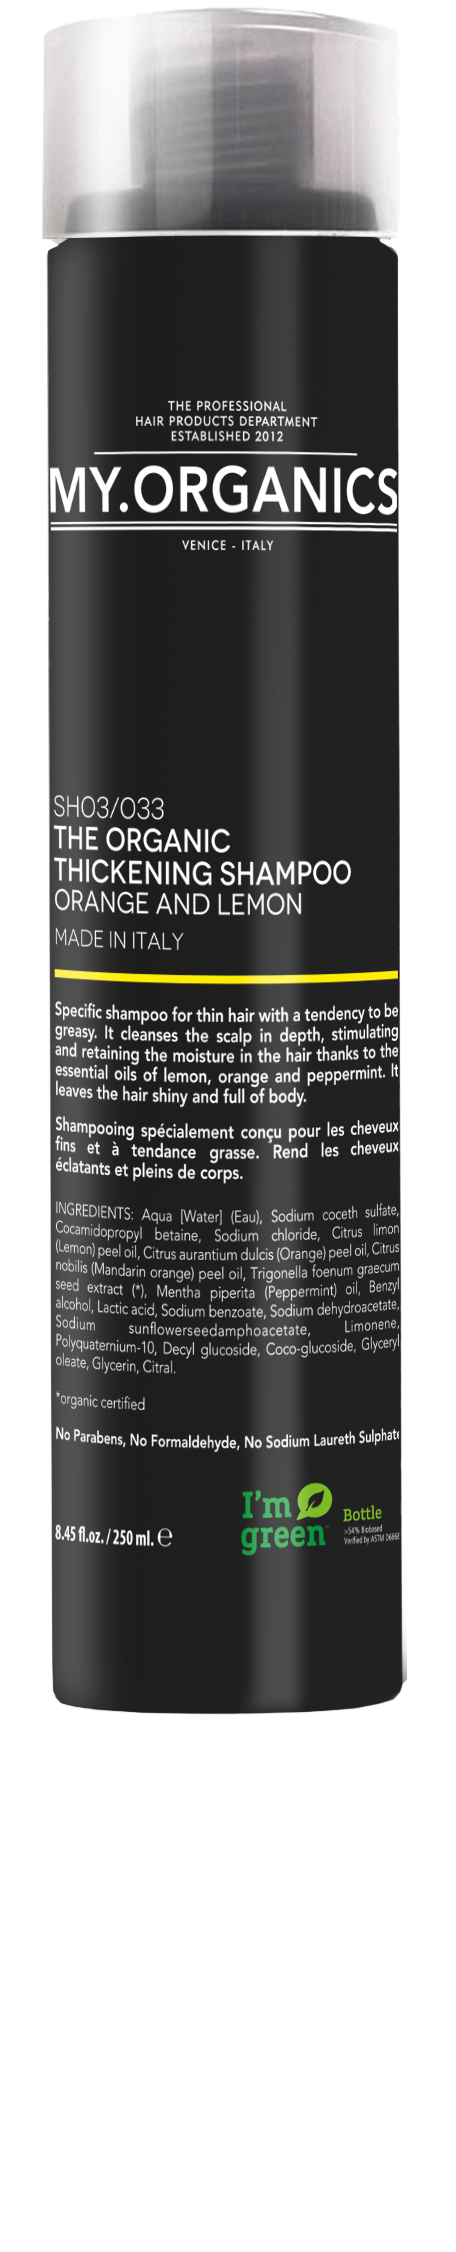 The Organic Thickening Shampoo